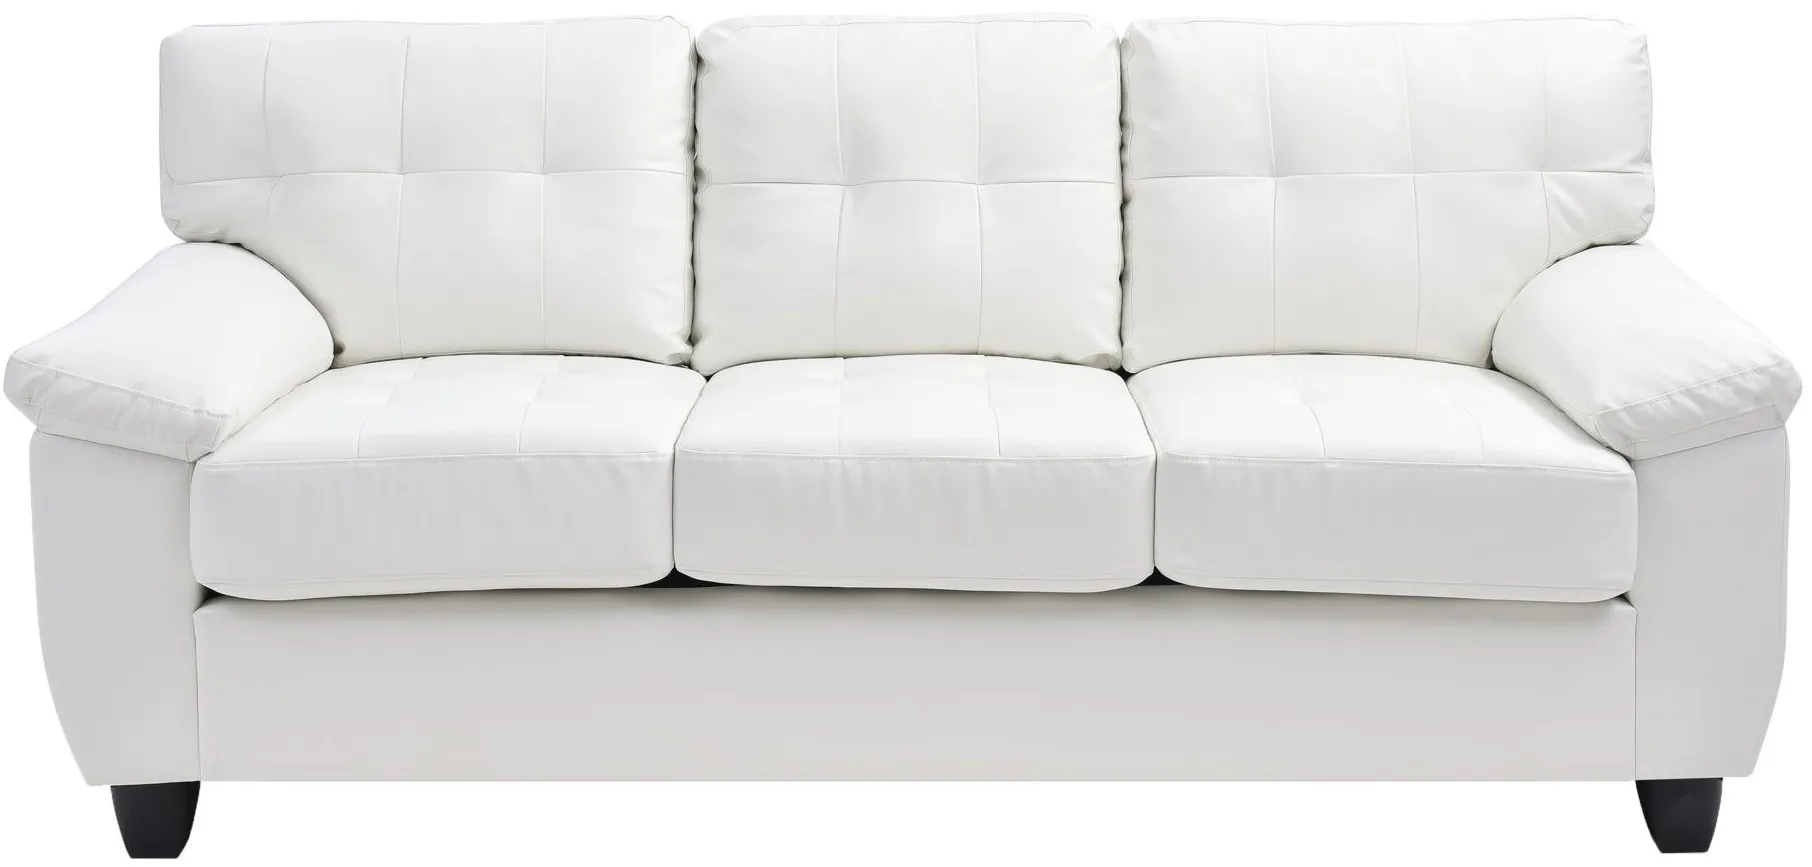 Gallant Sofa in White by Glory Furniture